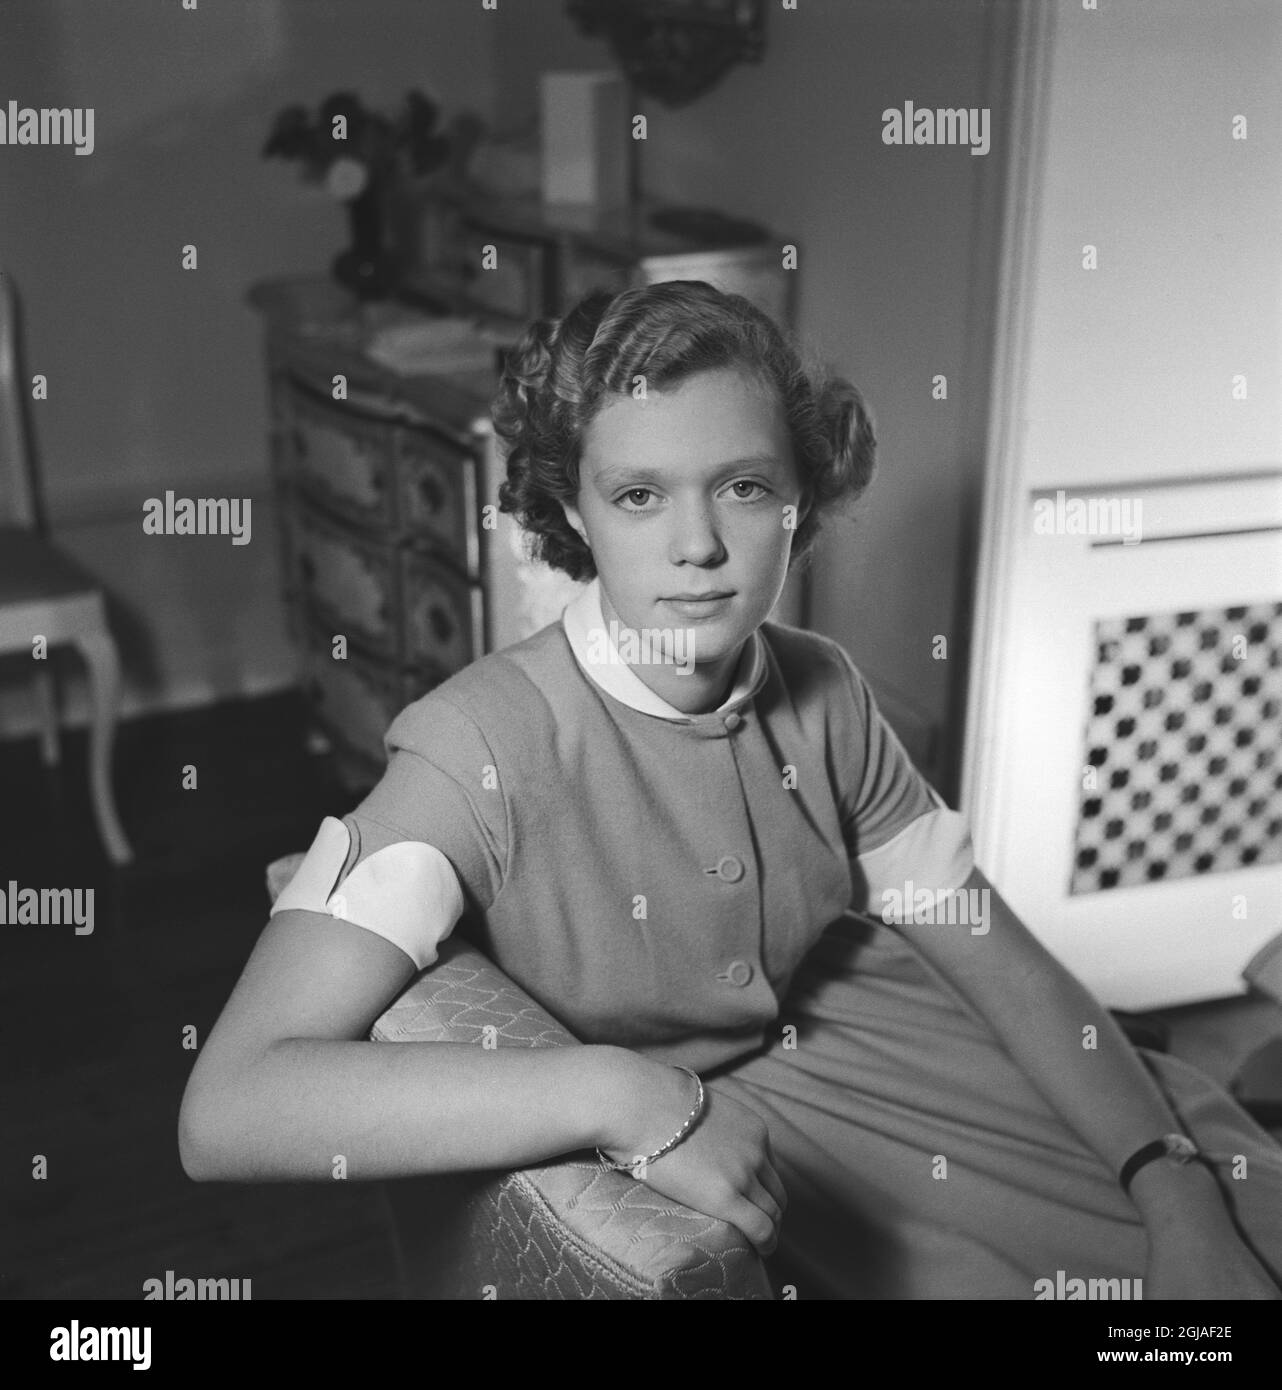 ARKIV 1950. Princess Birgitta 13 years old Foto: Lennart Nilsson / SCANPIX / Kod: 3054  Stock Photo